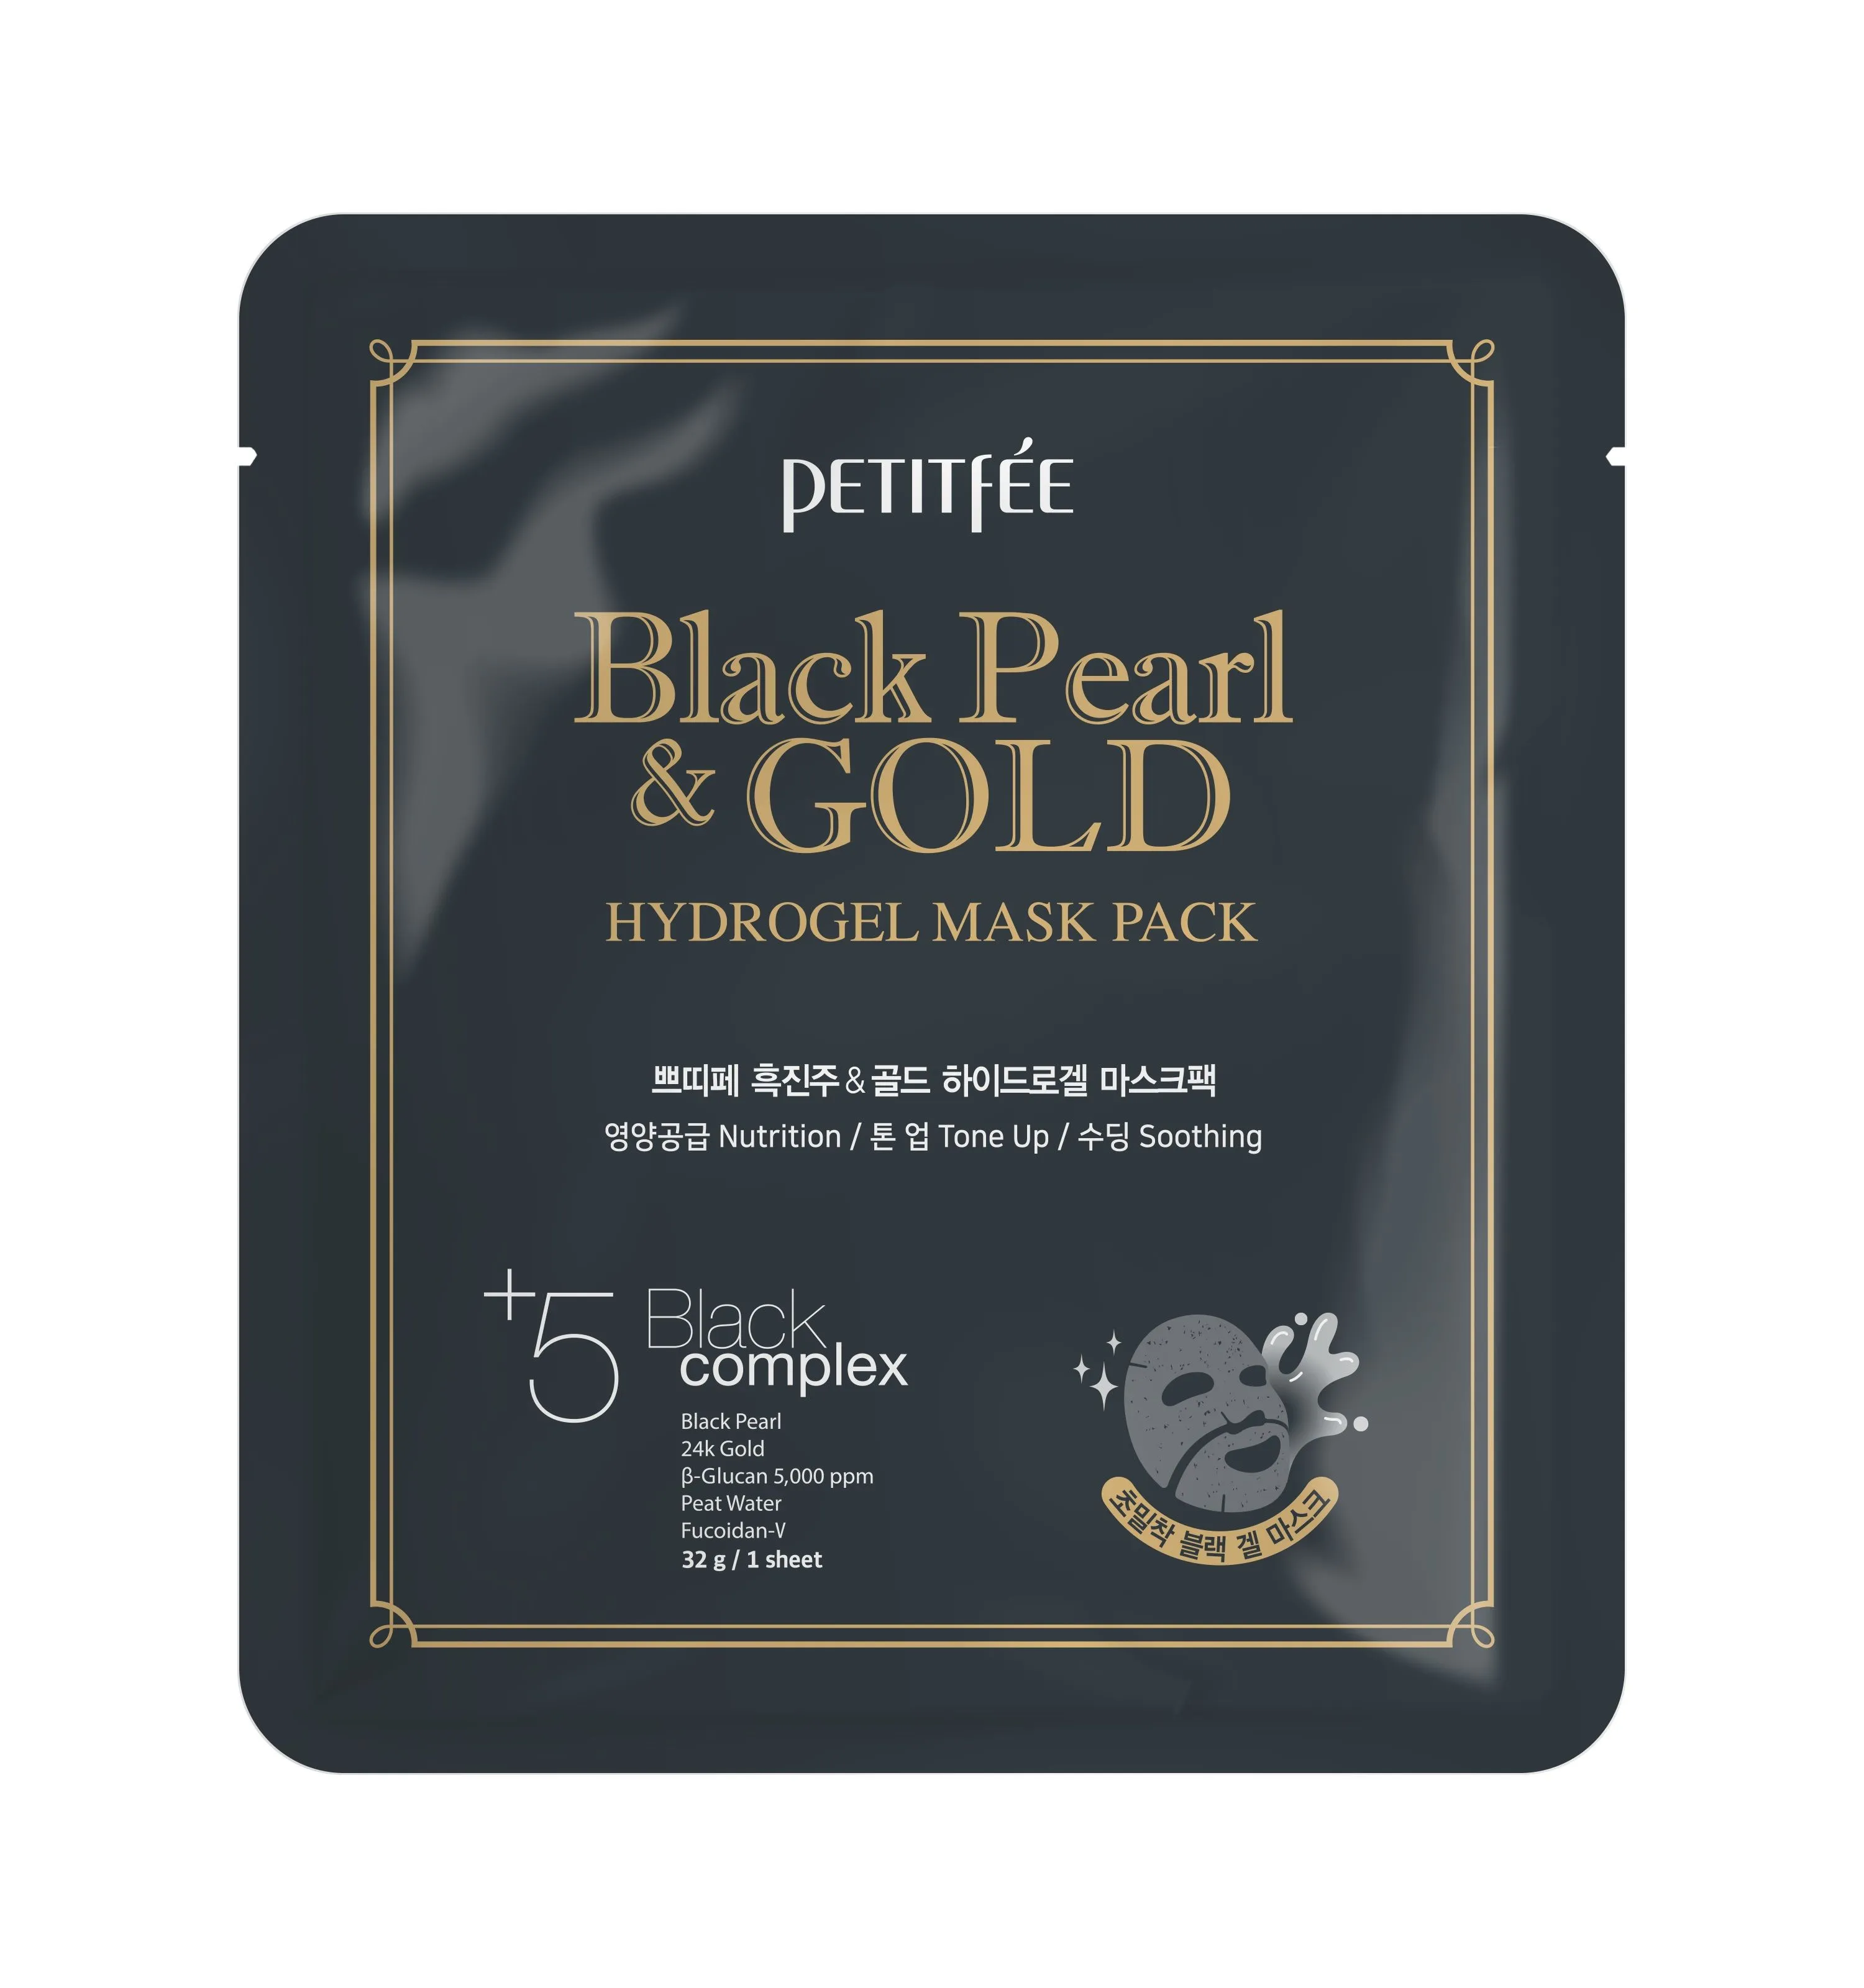 Petitfee & Koelf Black Pearl & Gold Hydrogel Mask Pack 32 g / 1 sheet